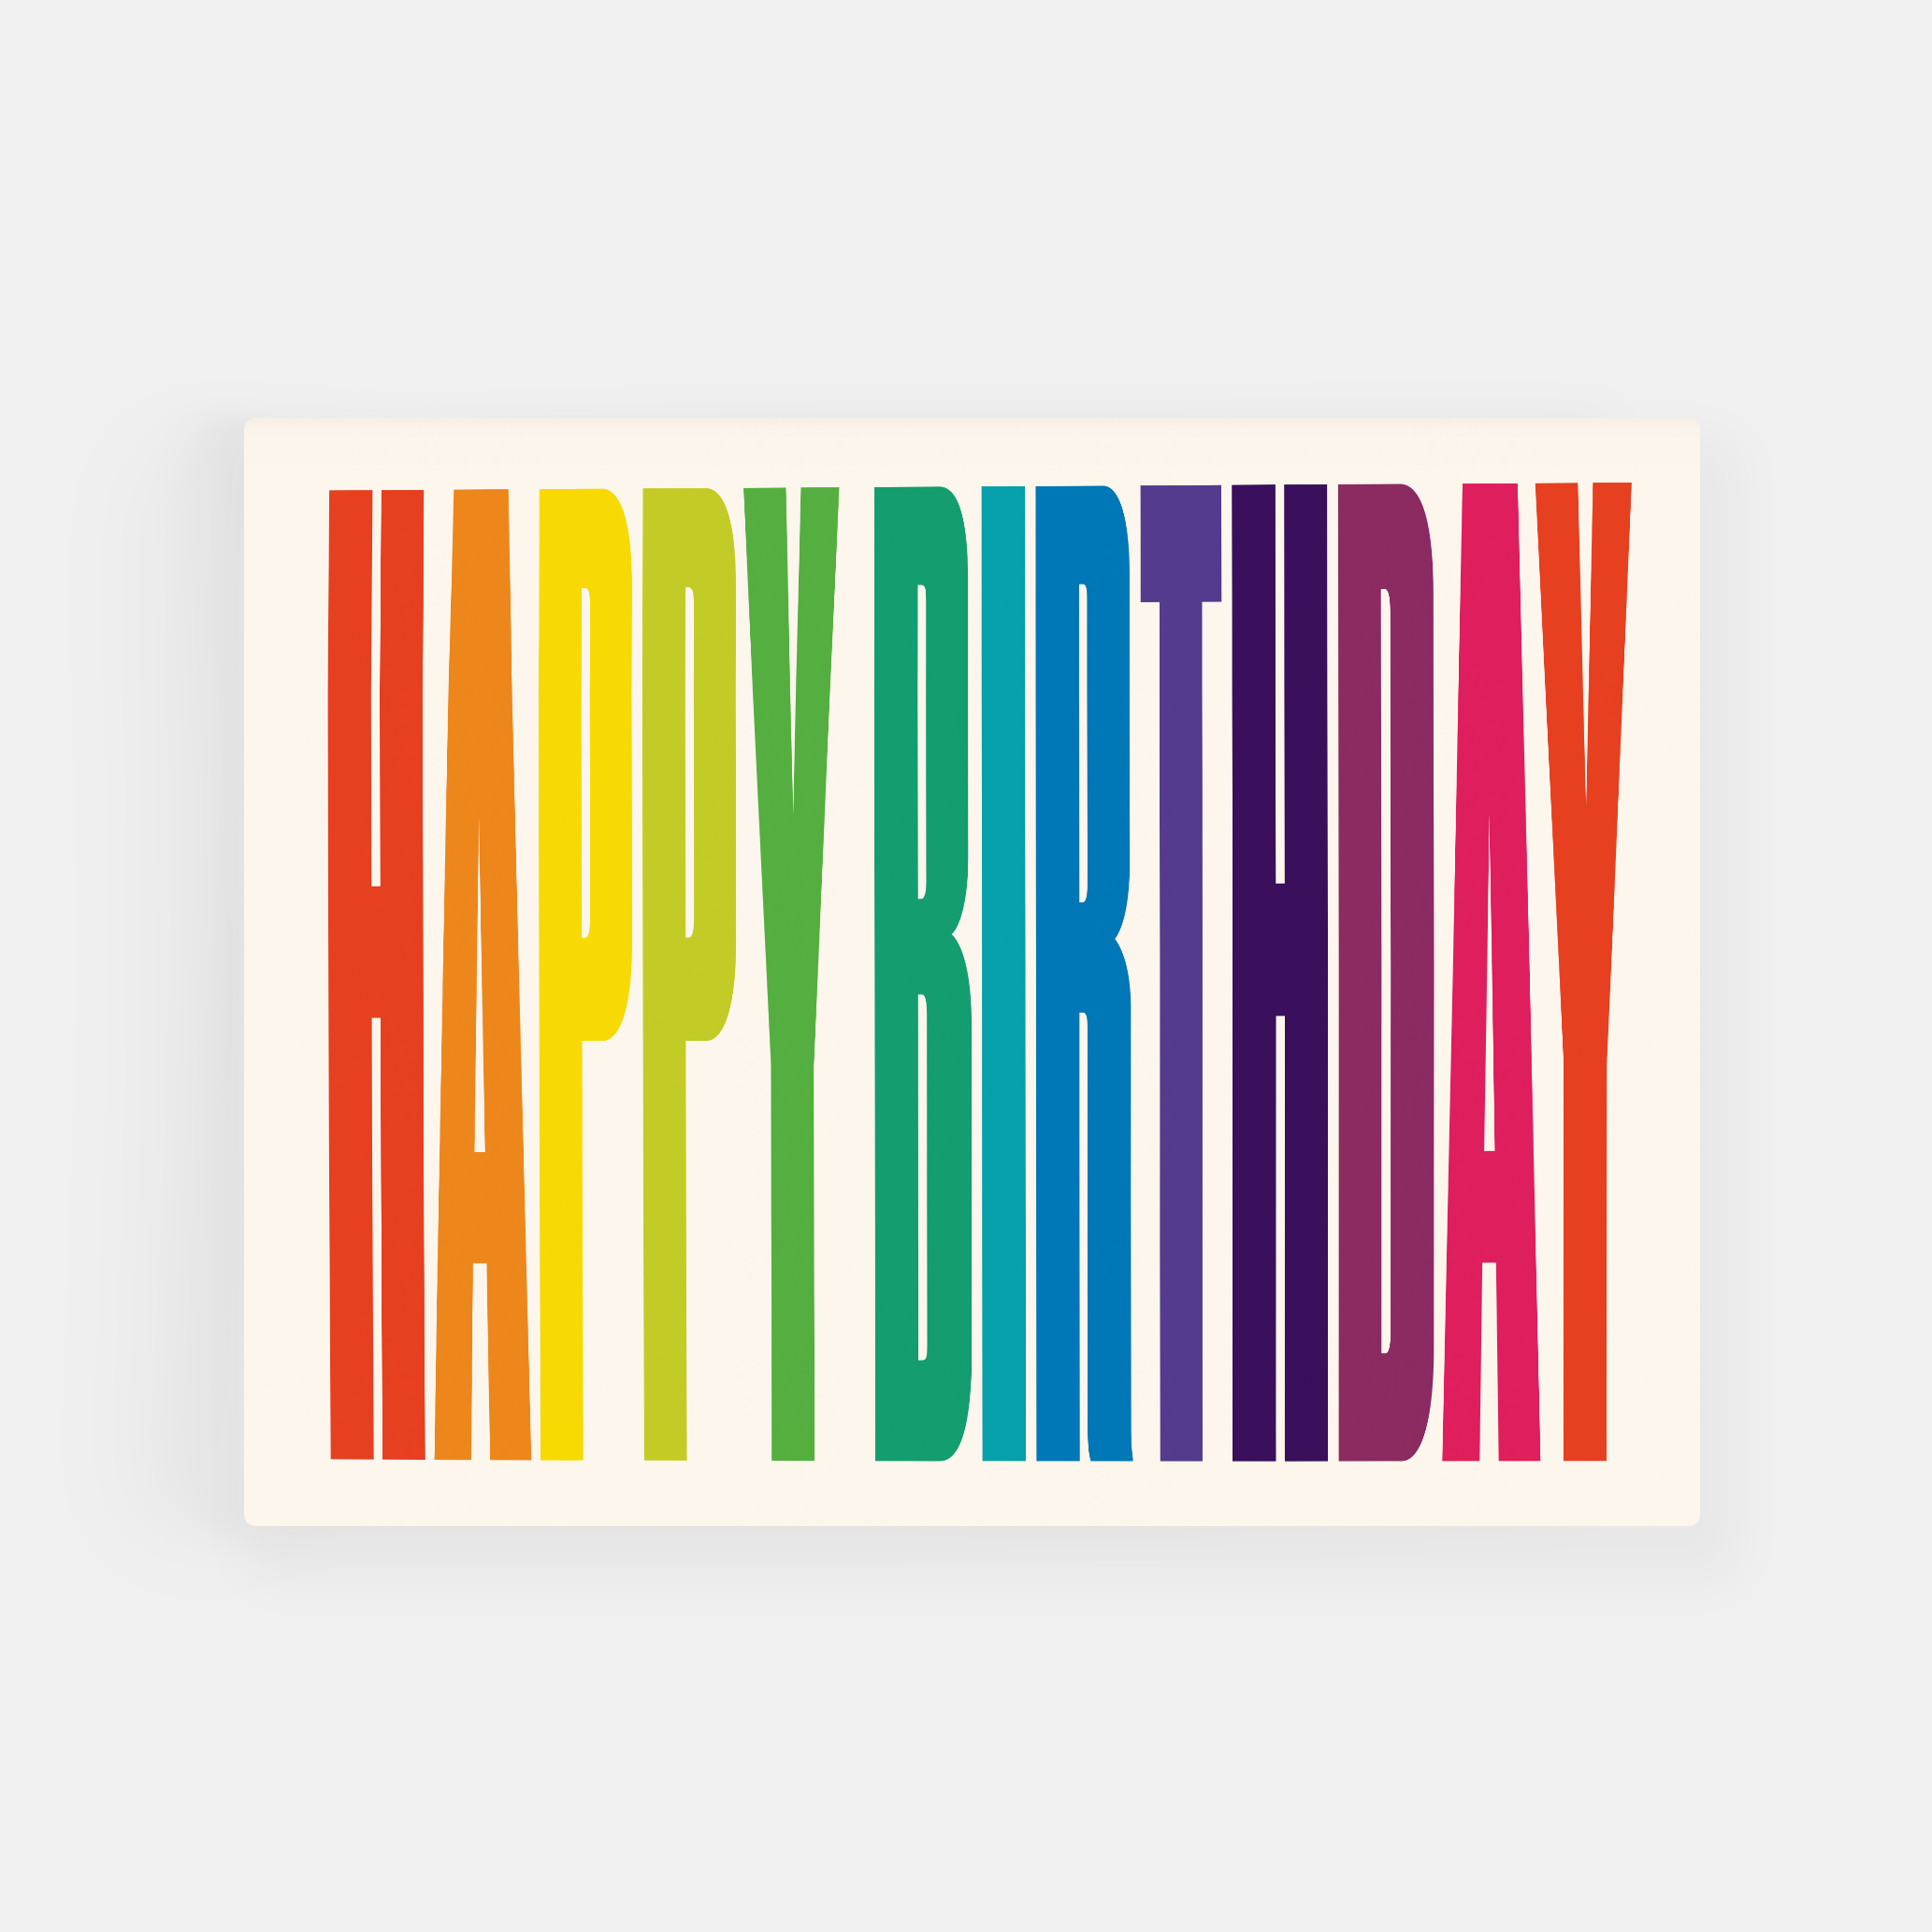 Happy Birthday Rainbow Greeting Card